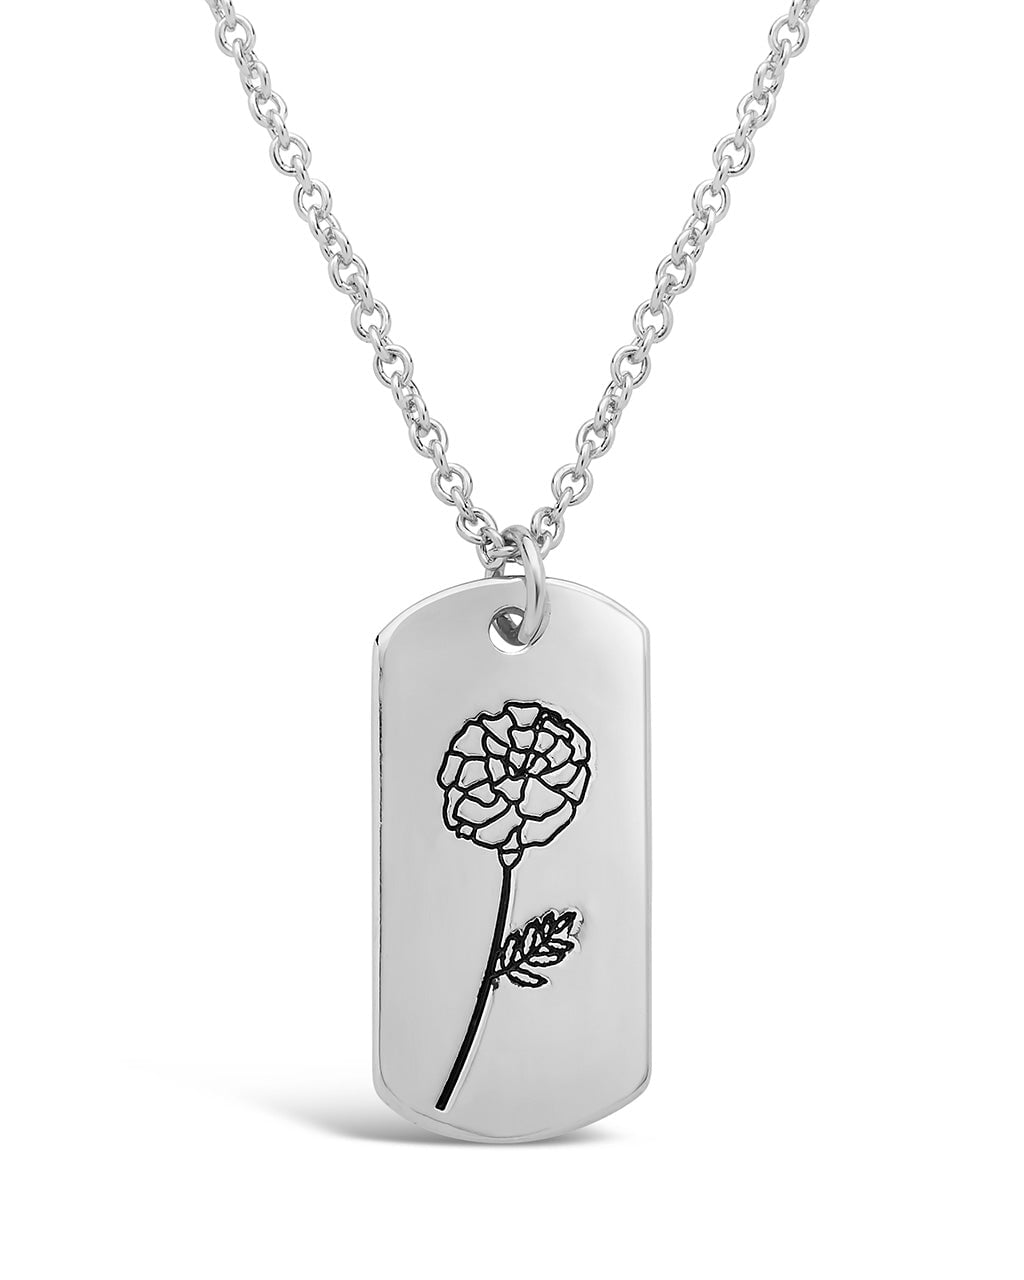 Birth Flower Pendant Necklace Sterling Forever Silver October / Marigold 